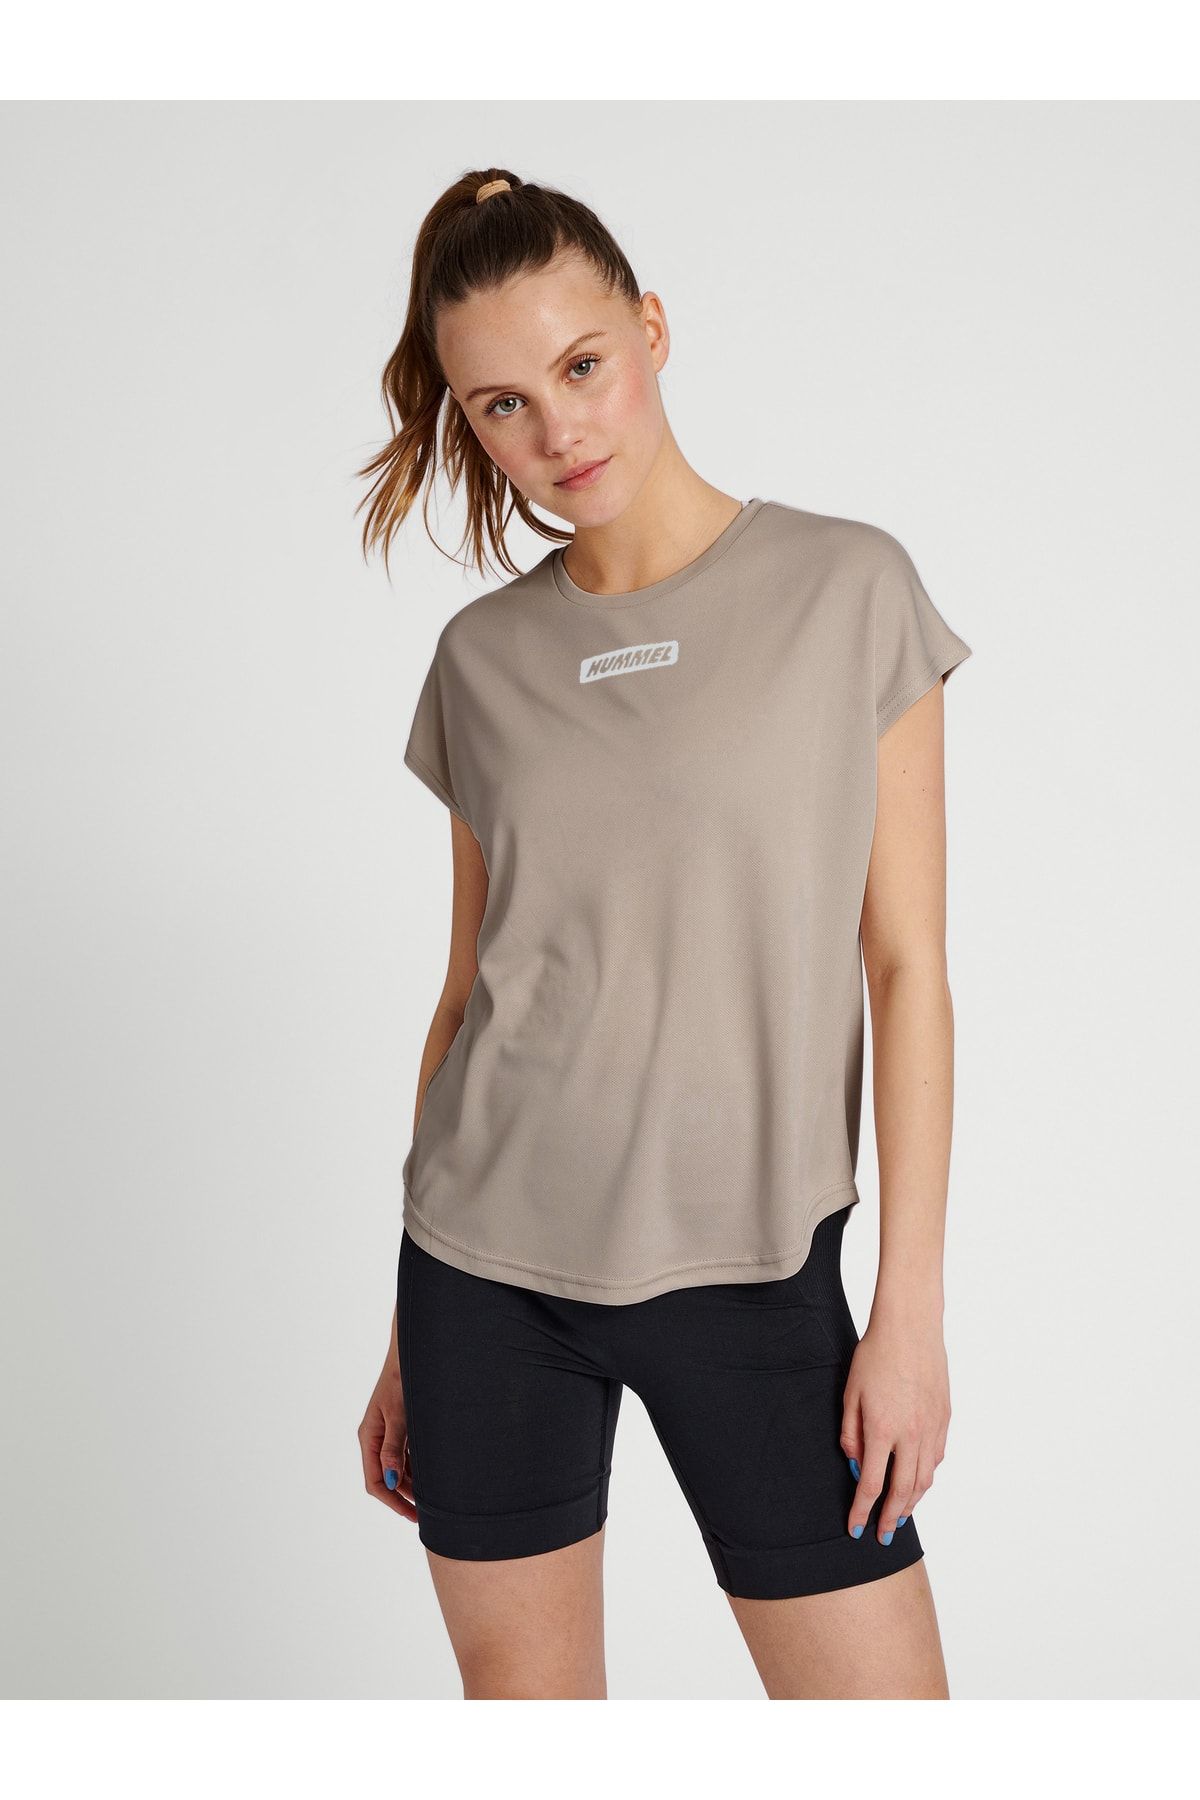 HUMMEL T-Shirt - Beige Trendyol - fit Relaxed 